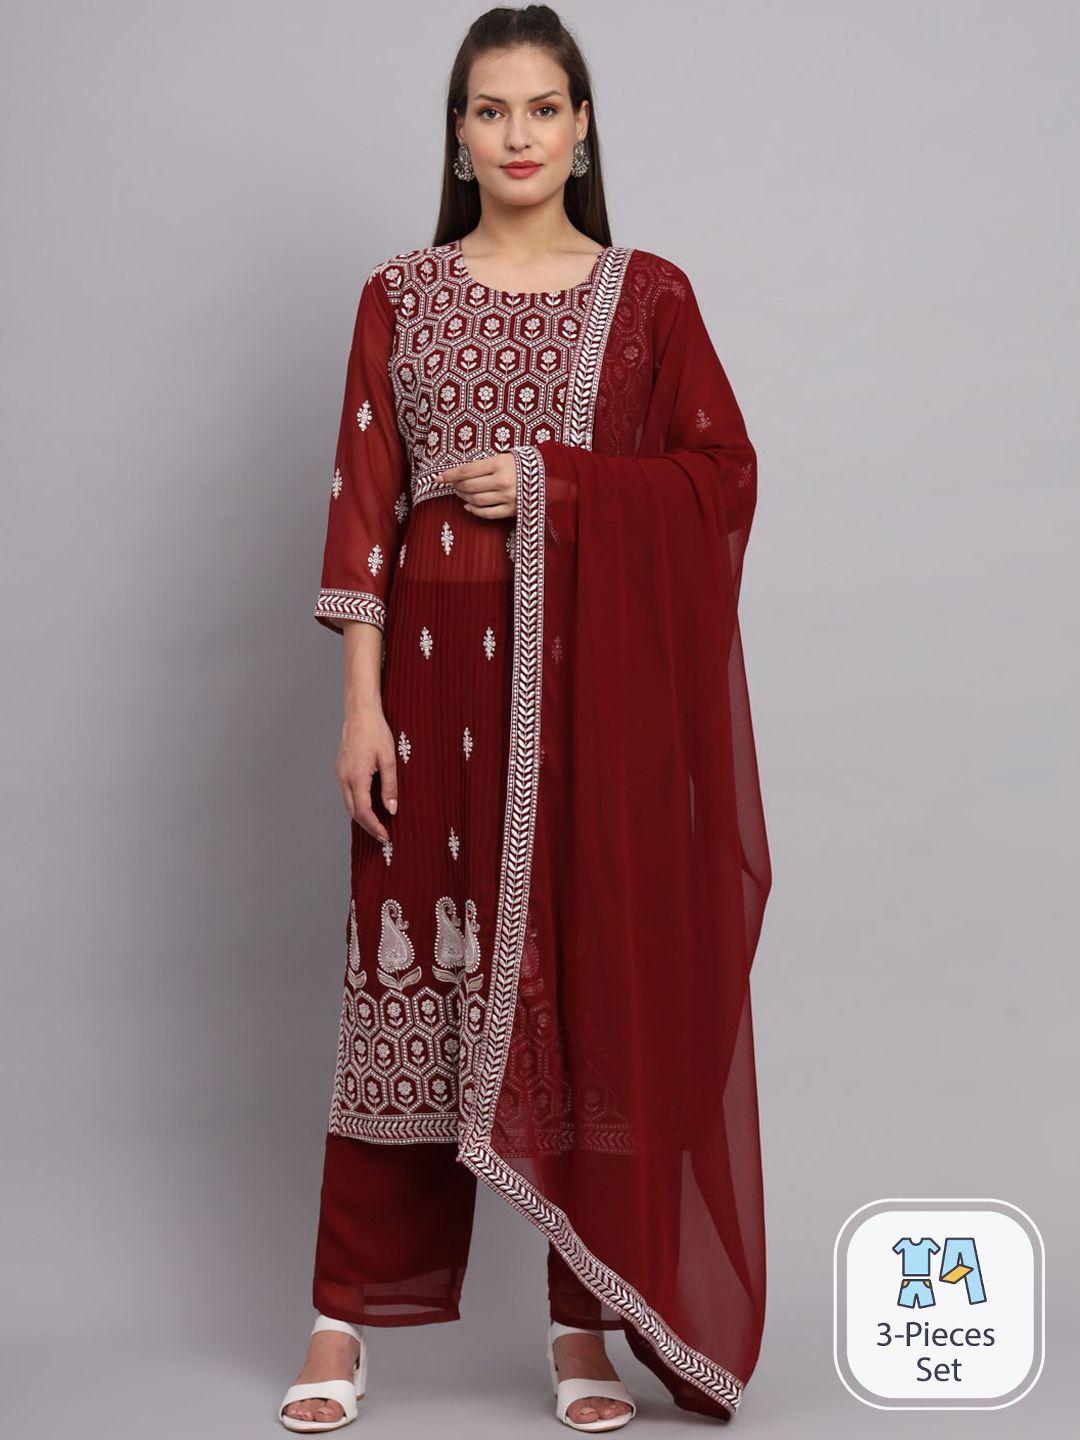 vairagee ethnic motifs embroidered pleated thread work kurta with trousers & dupatta